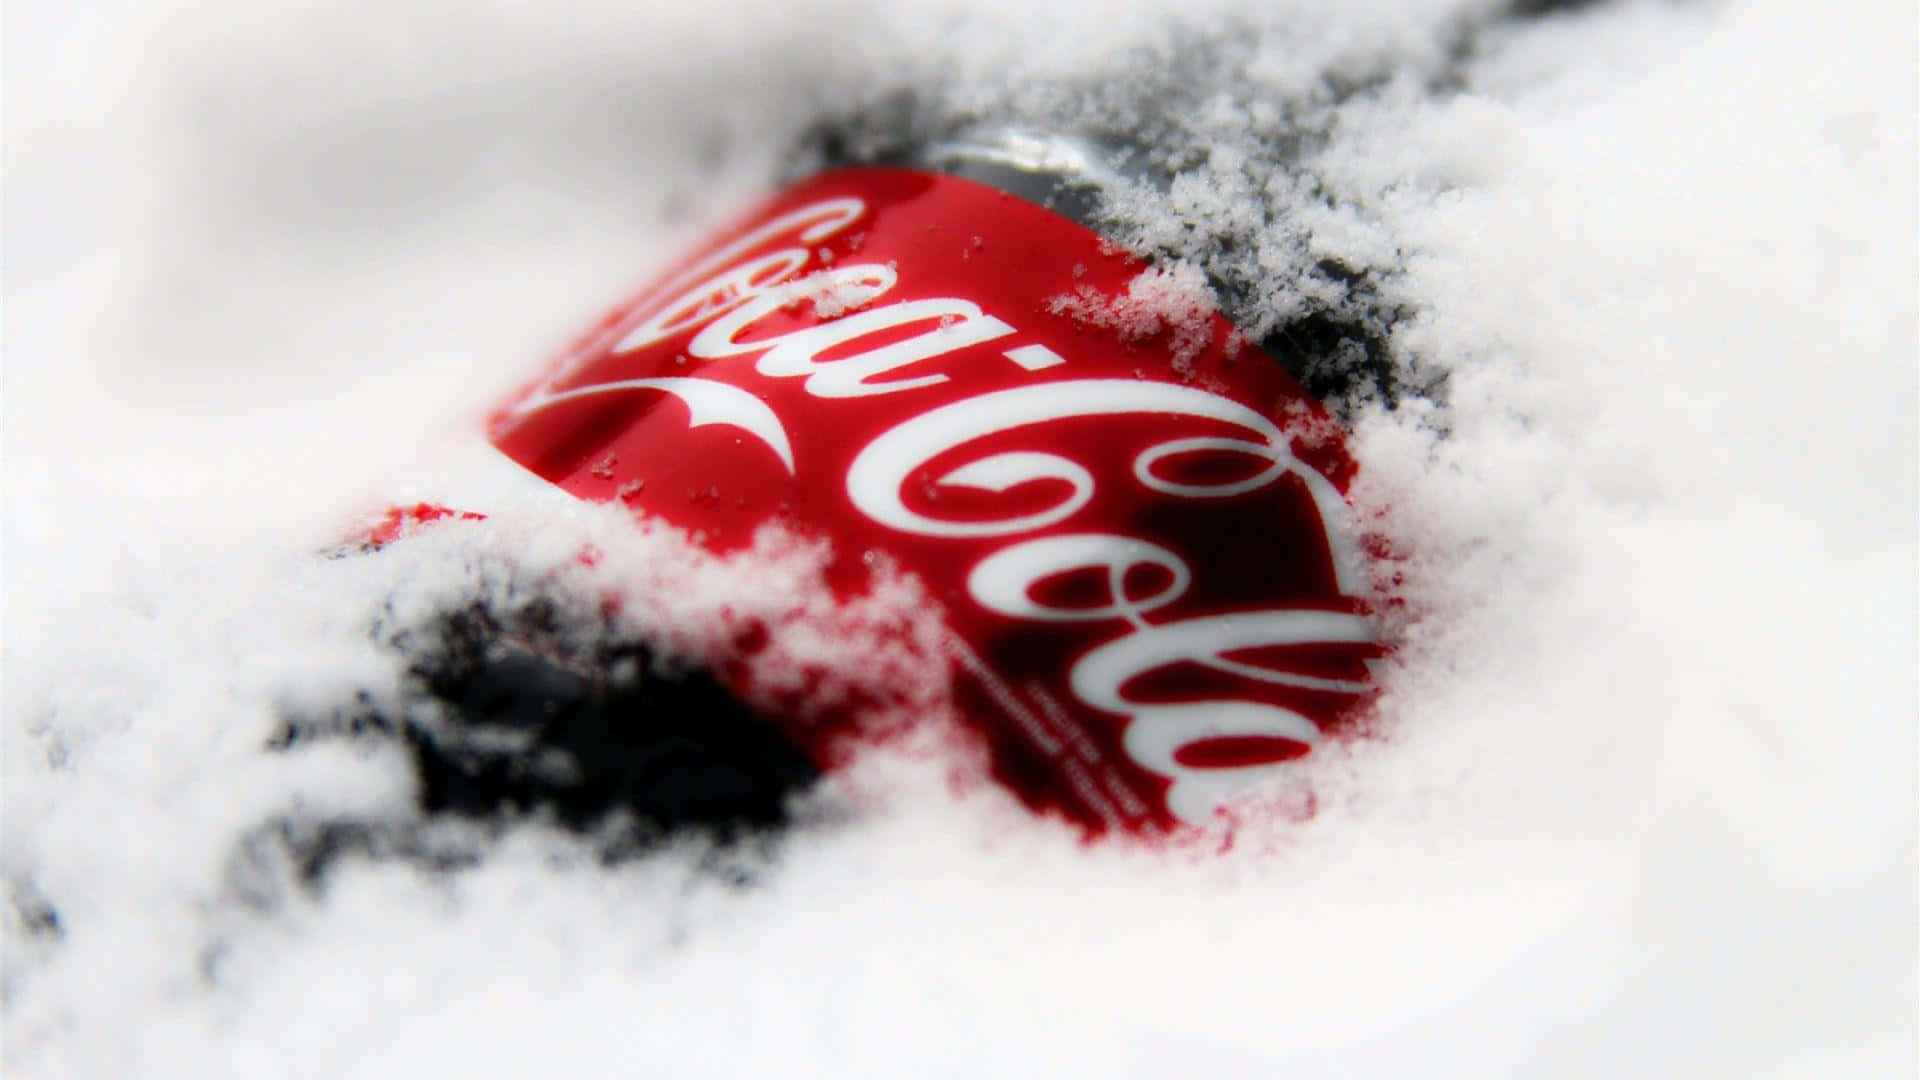 Refreshing Bubbles of Coca-Cola